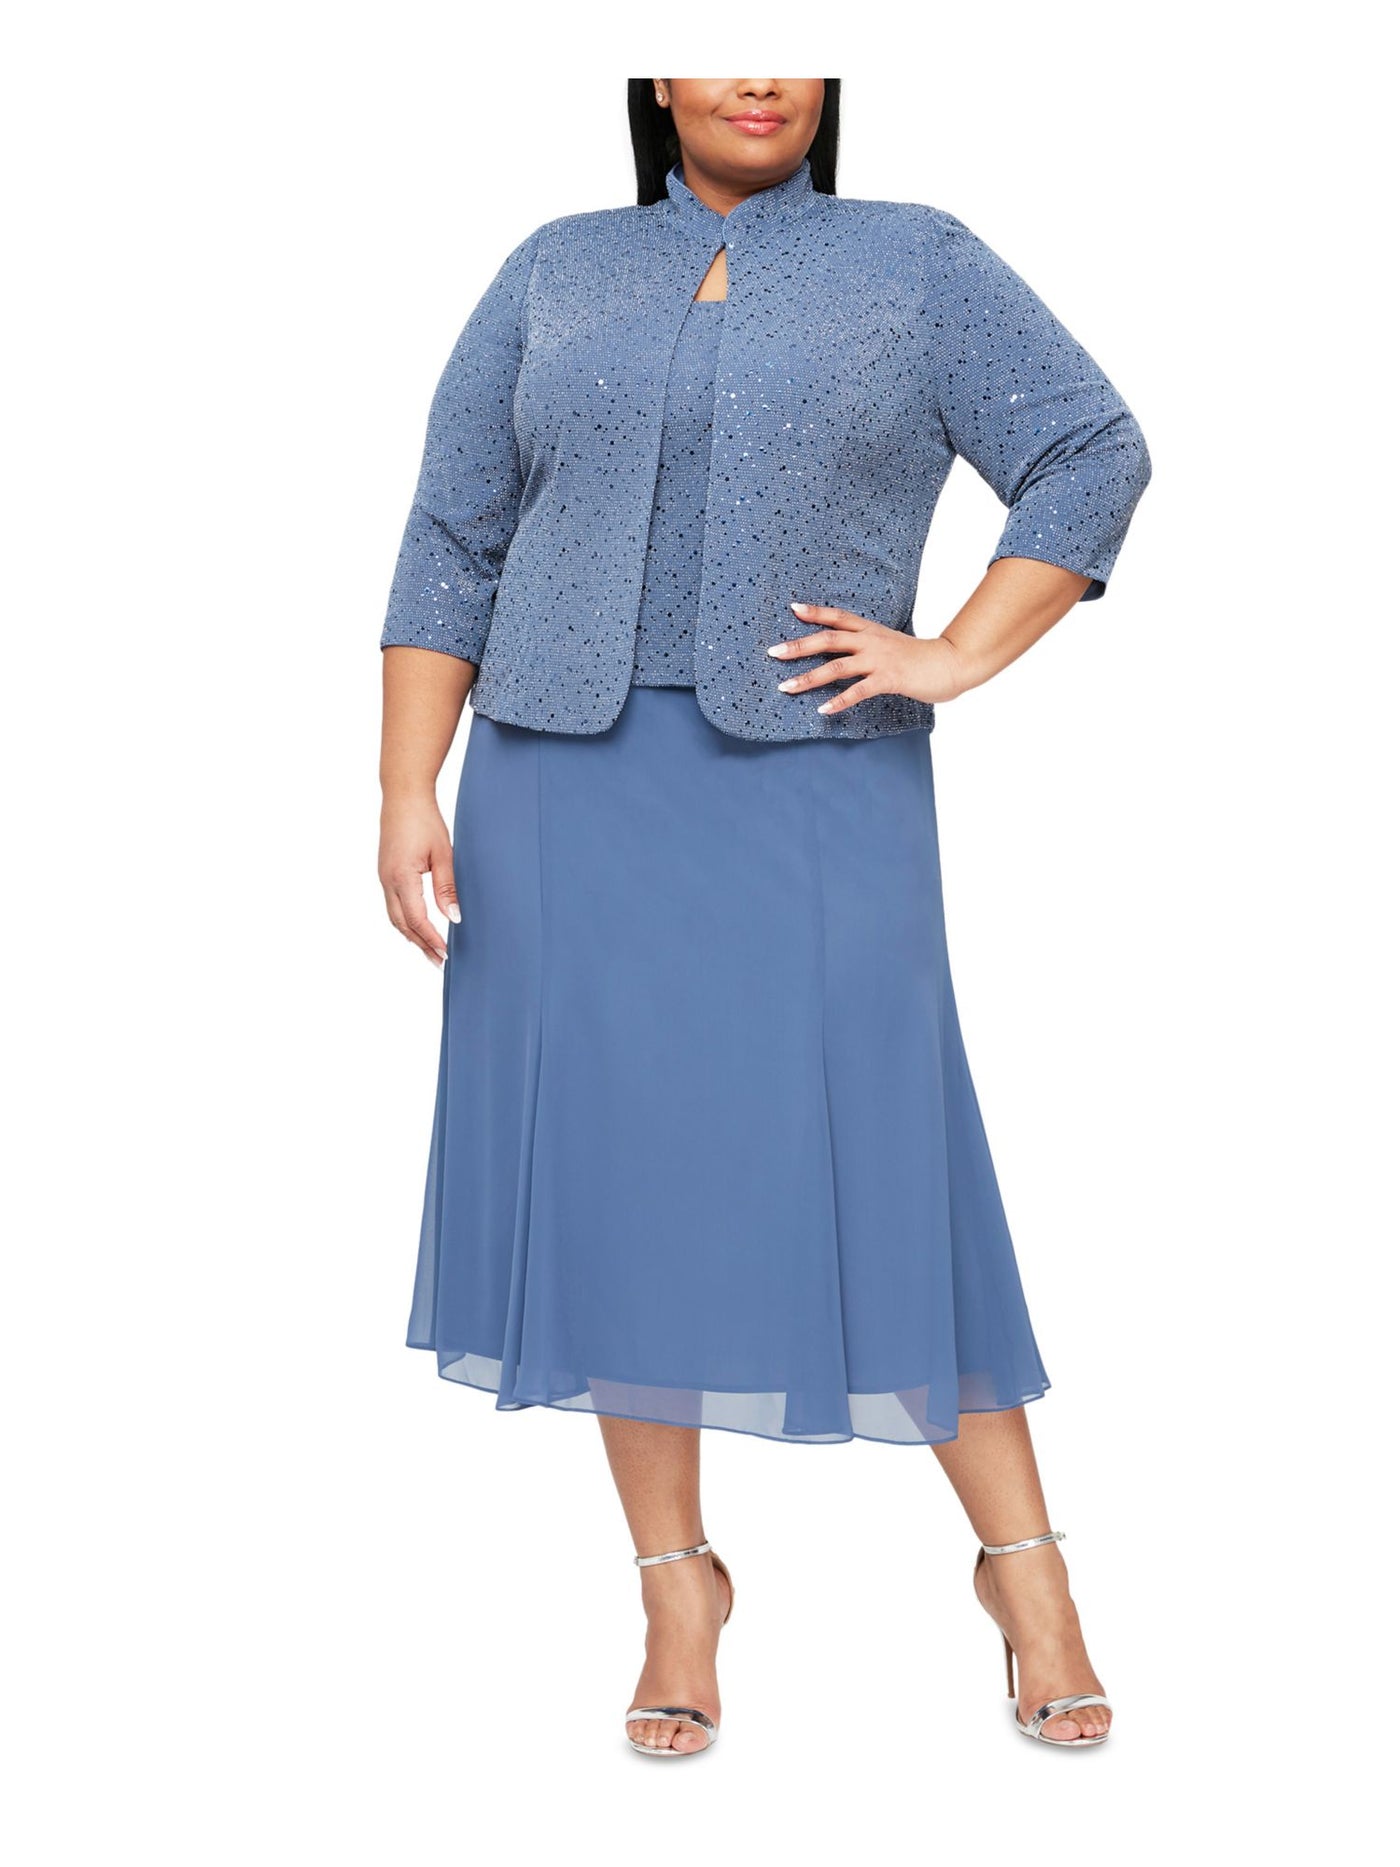 ALEX EVENINGS WOMAN Womens Blue Unlined Sheer Shoulder Pads Polka Dot 3/4 Sleeve Open Front Evening Cardigan Plus 18W